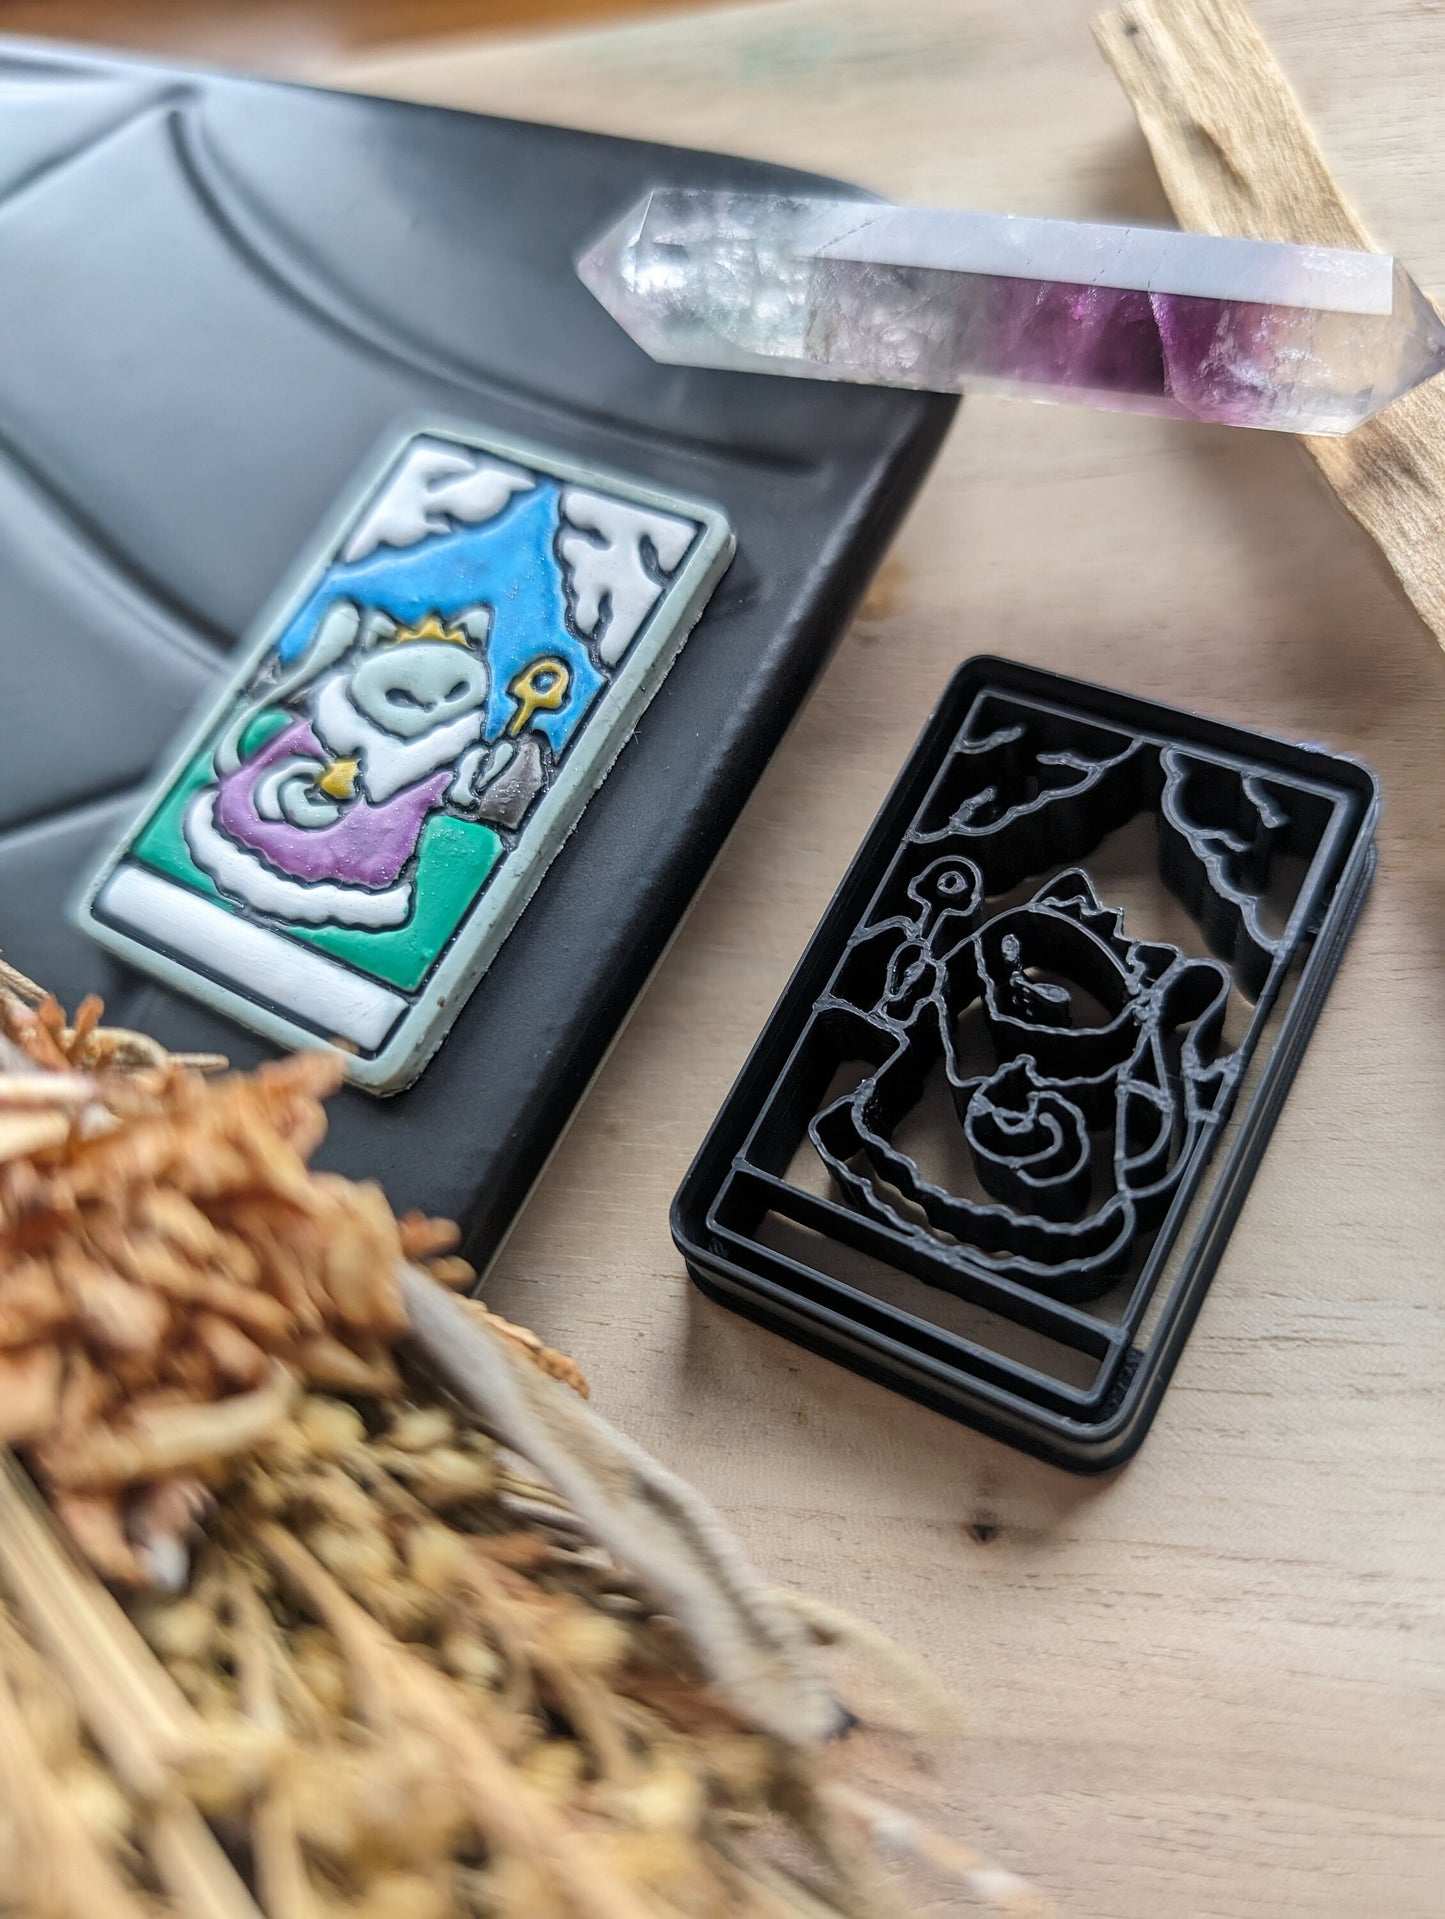 The Emperor Cat Themed Tarot Card Sharp Clay Cutter